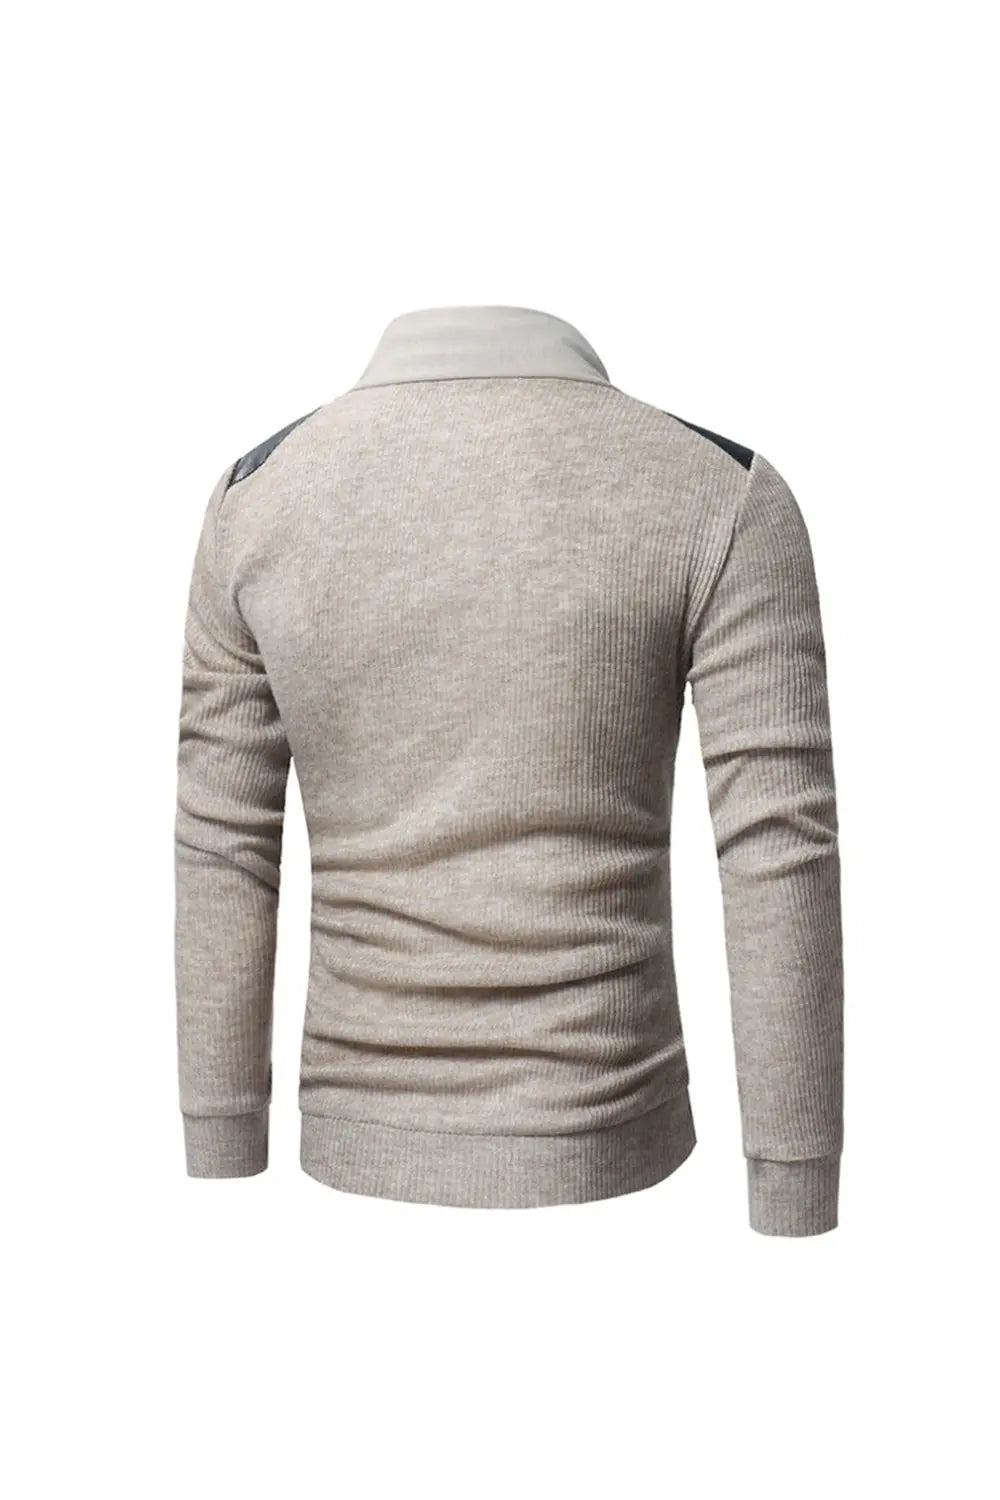 Crewneck Sweatshirt - Khaki - Strange Clothes